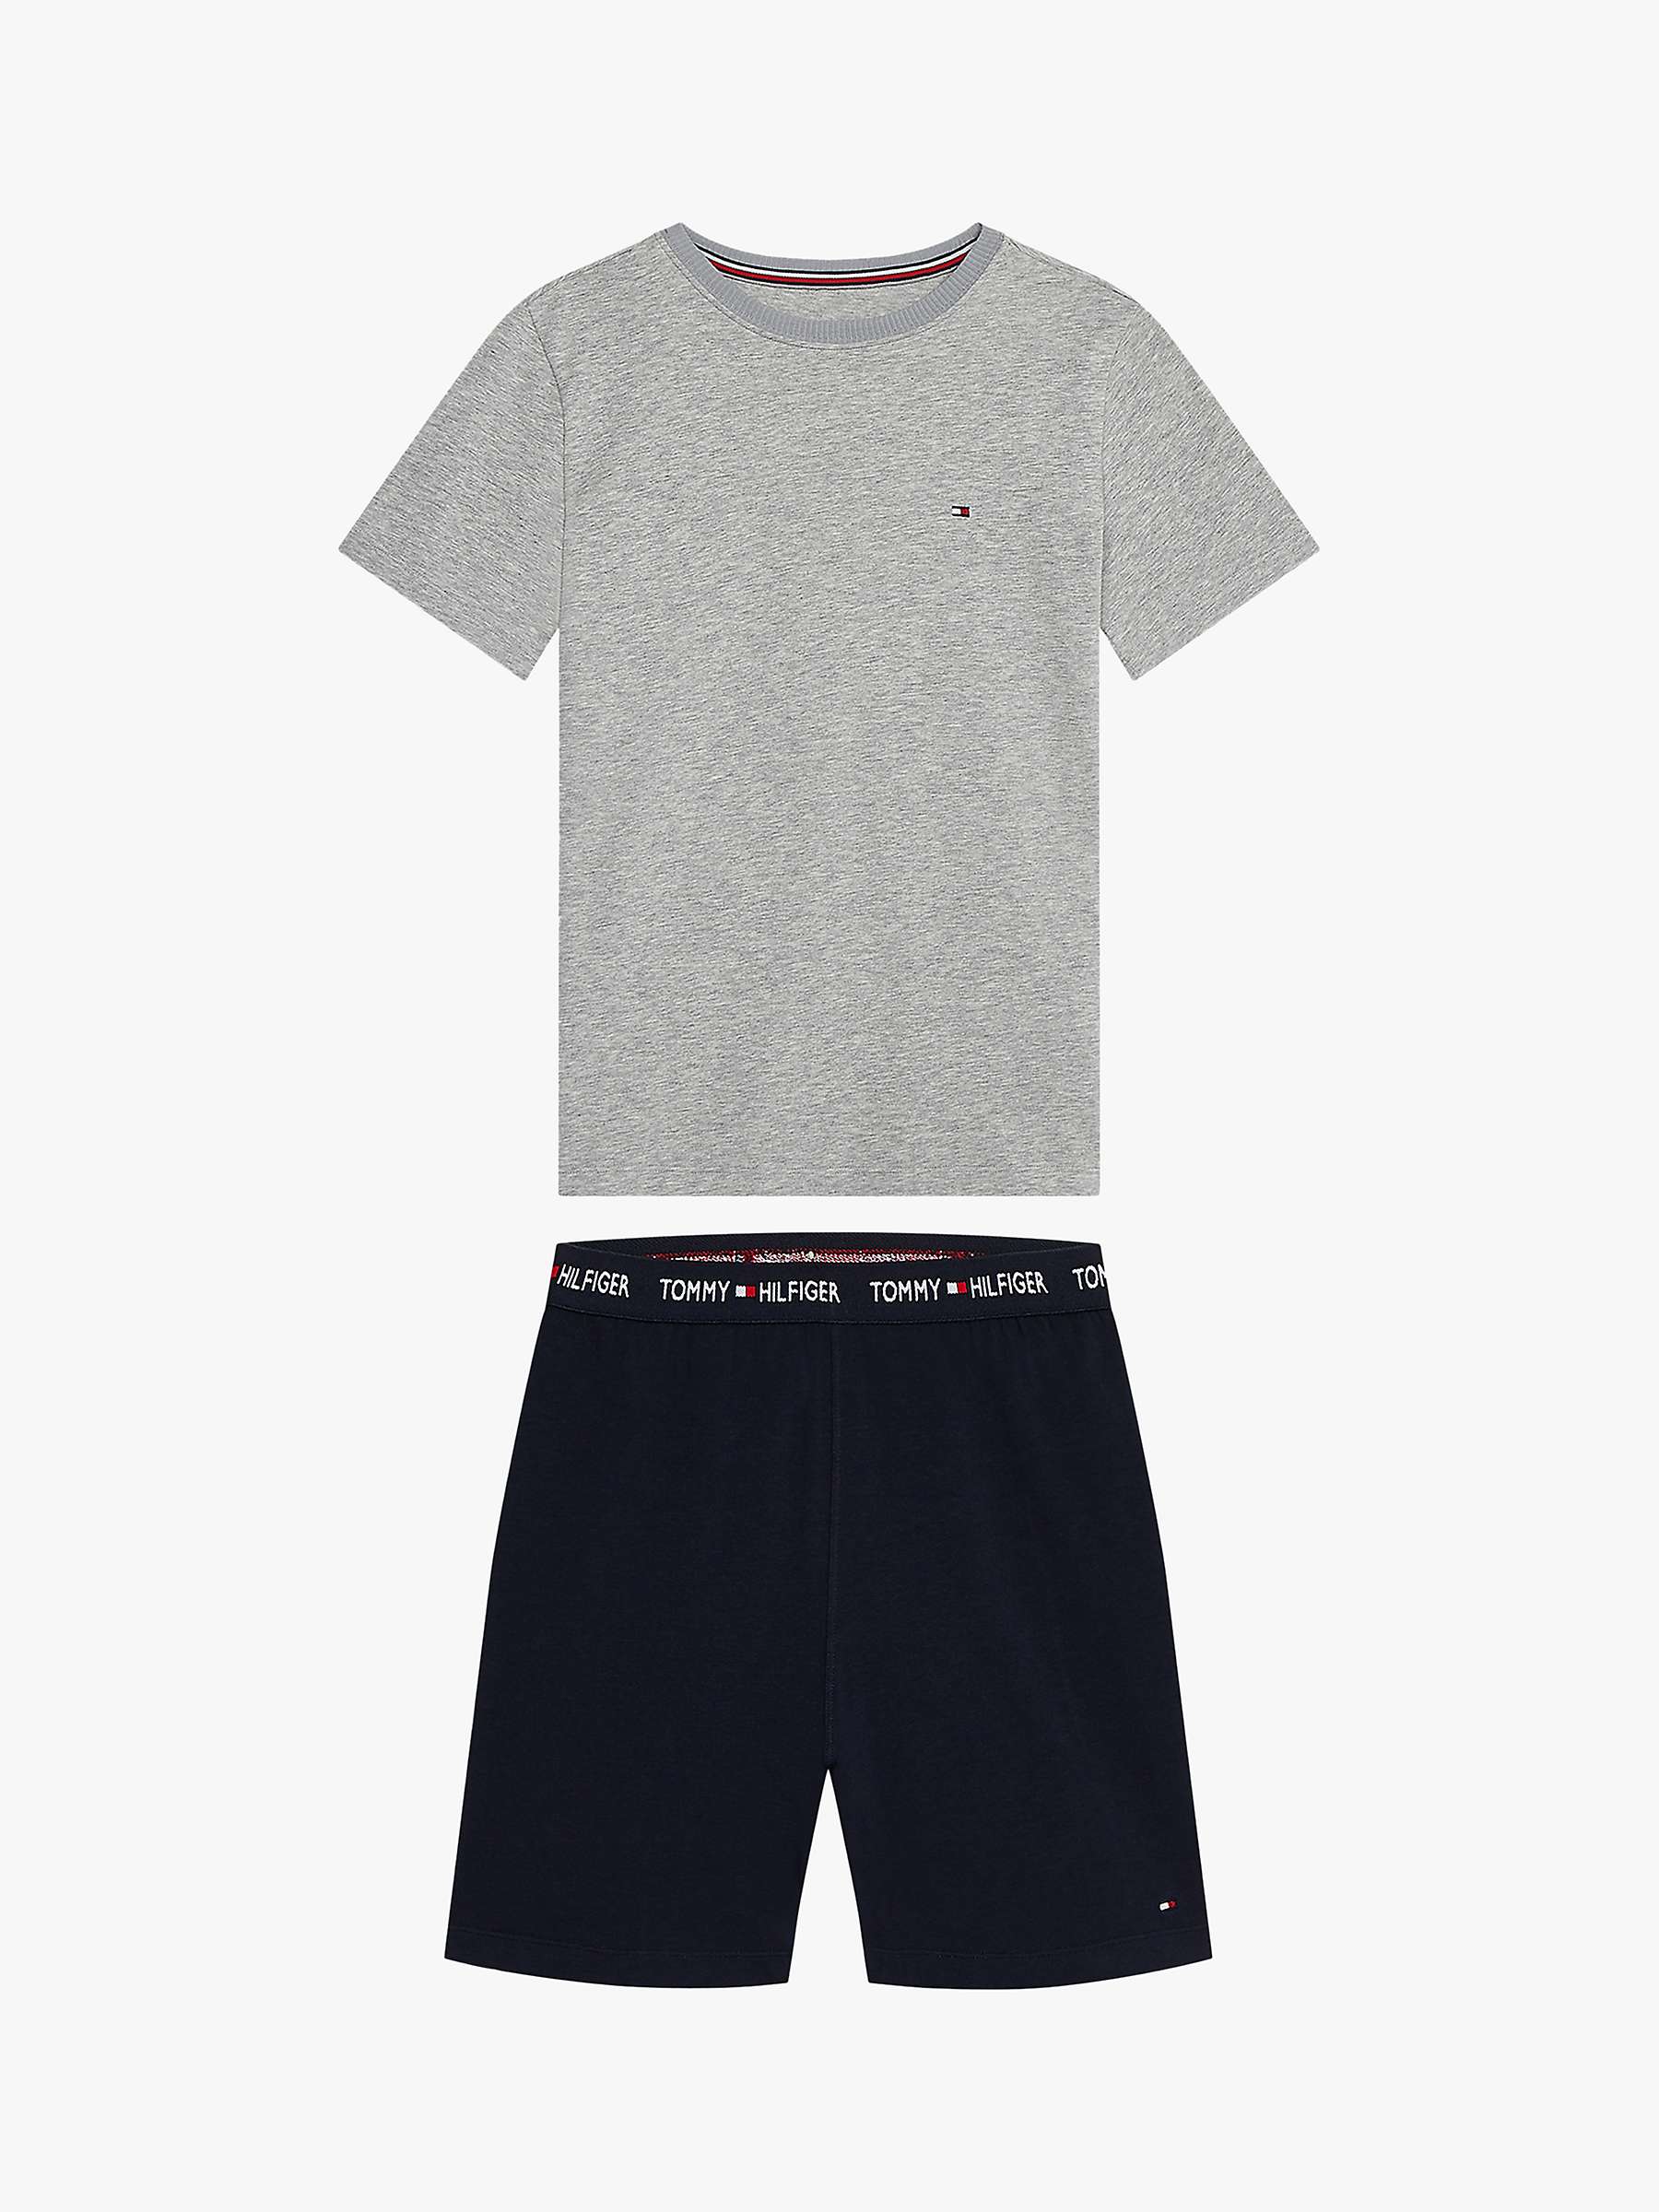 Buy Tommy Hilfiger Kids' Crew Neck T-Shirt Pyjama Set, Medium Grey Heather/Desert Sky Online at johnlewis.com